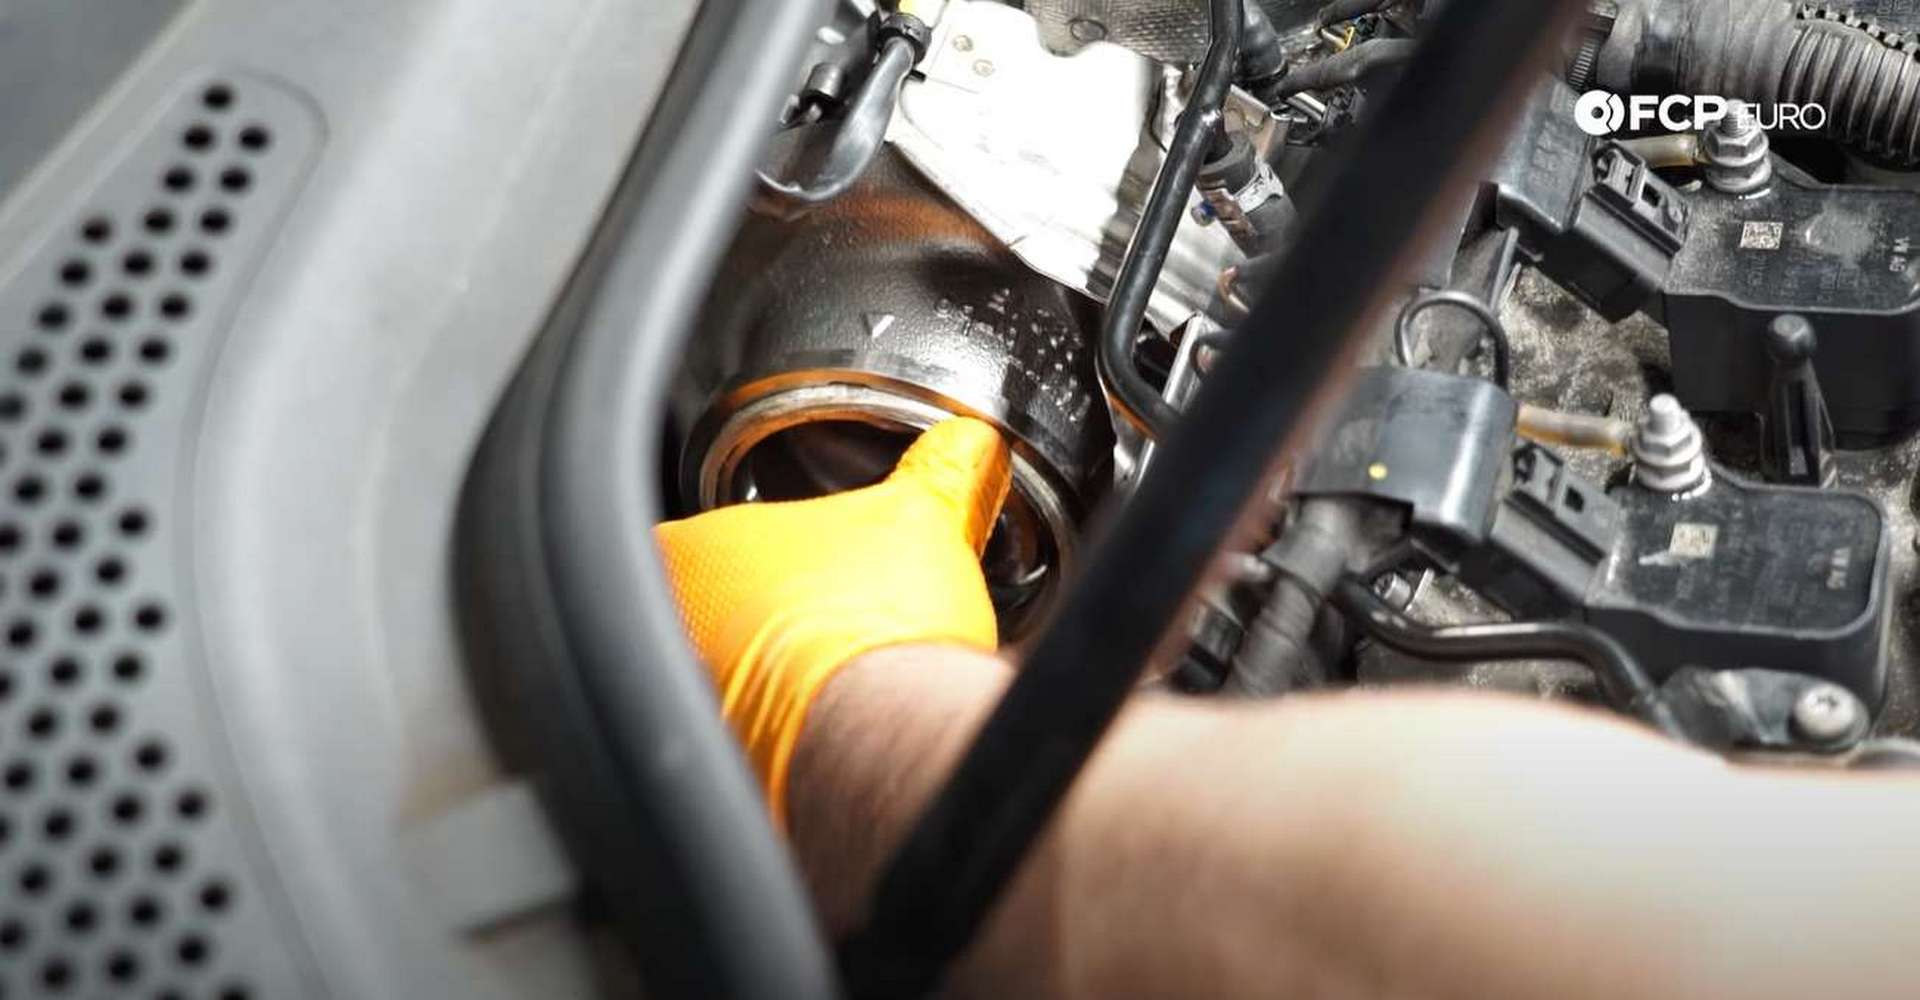 DIY MK7 VW GTI Turbocharger Upgrade installing the new exhaust housing gasket